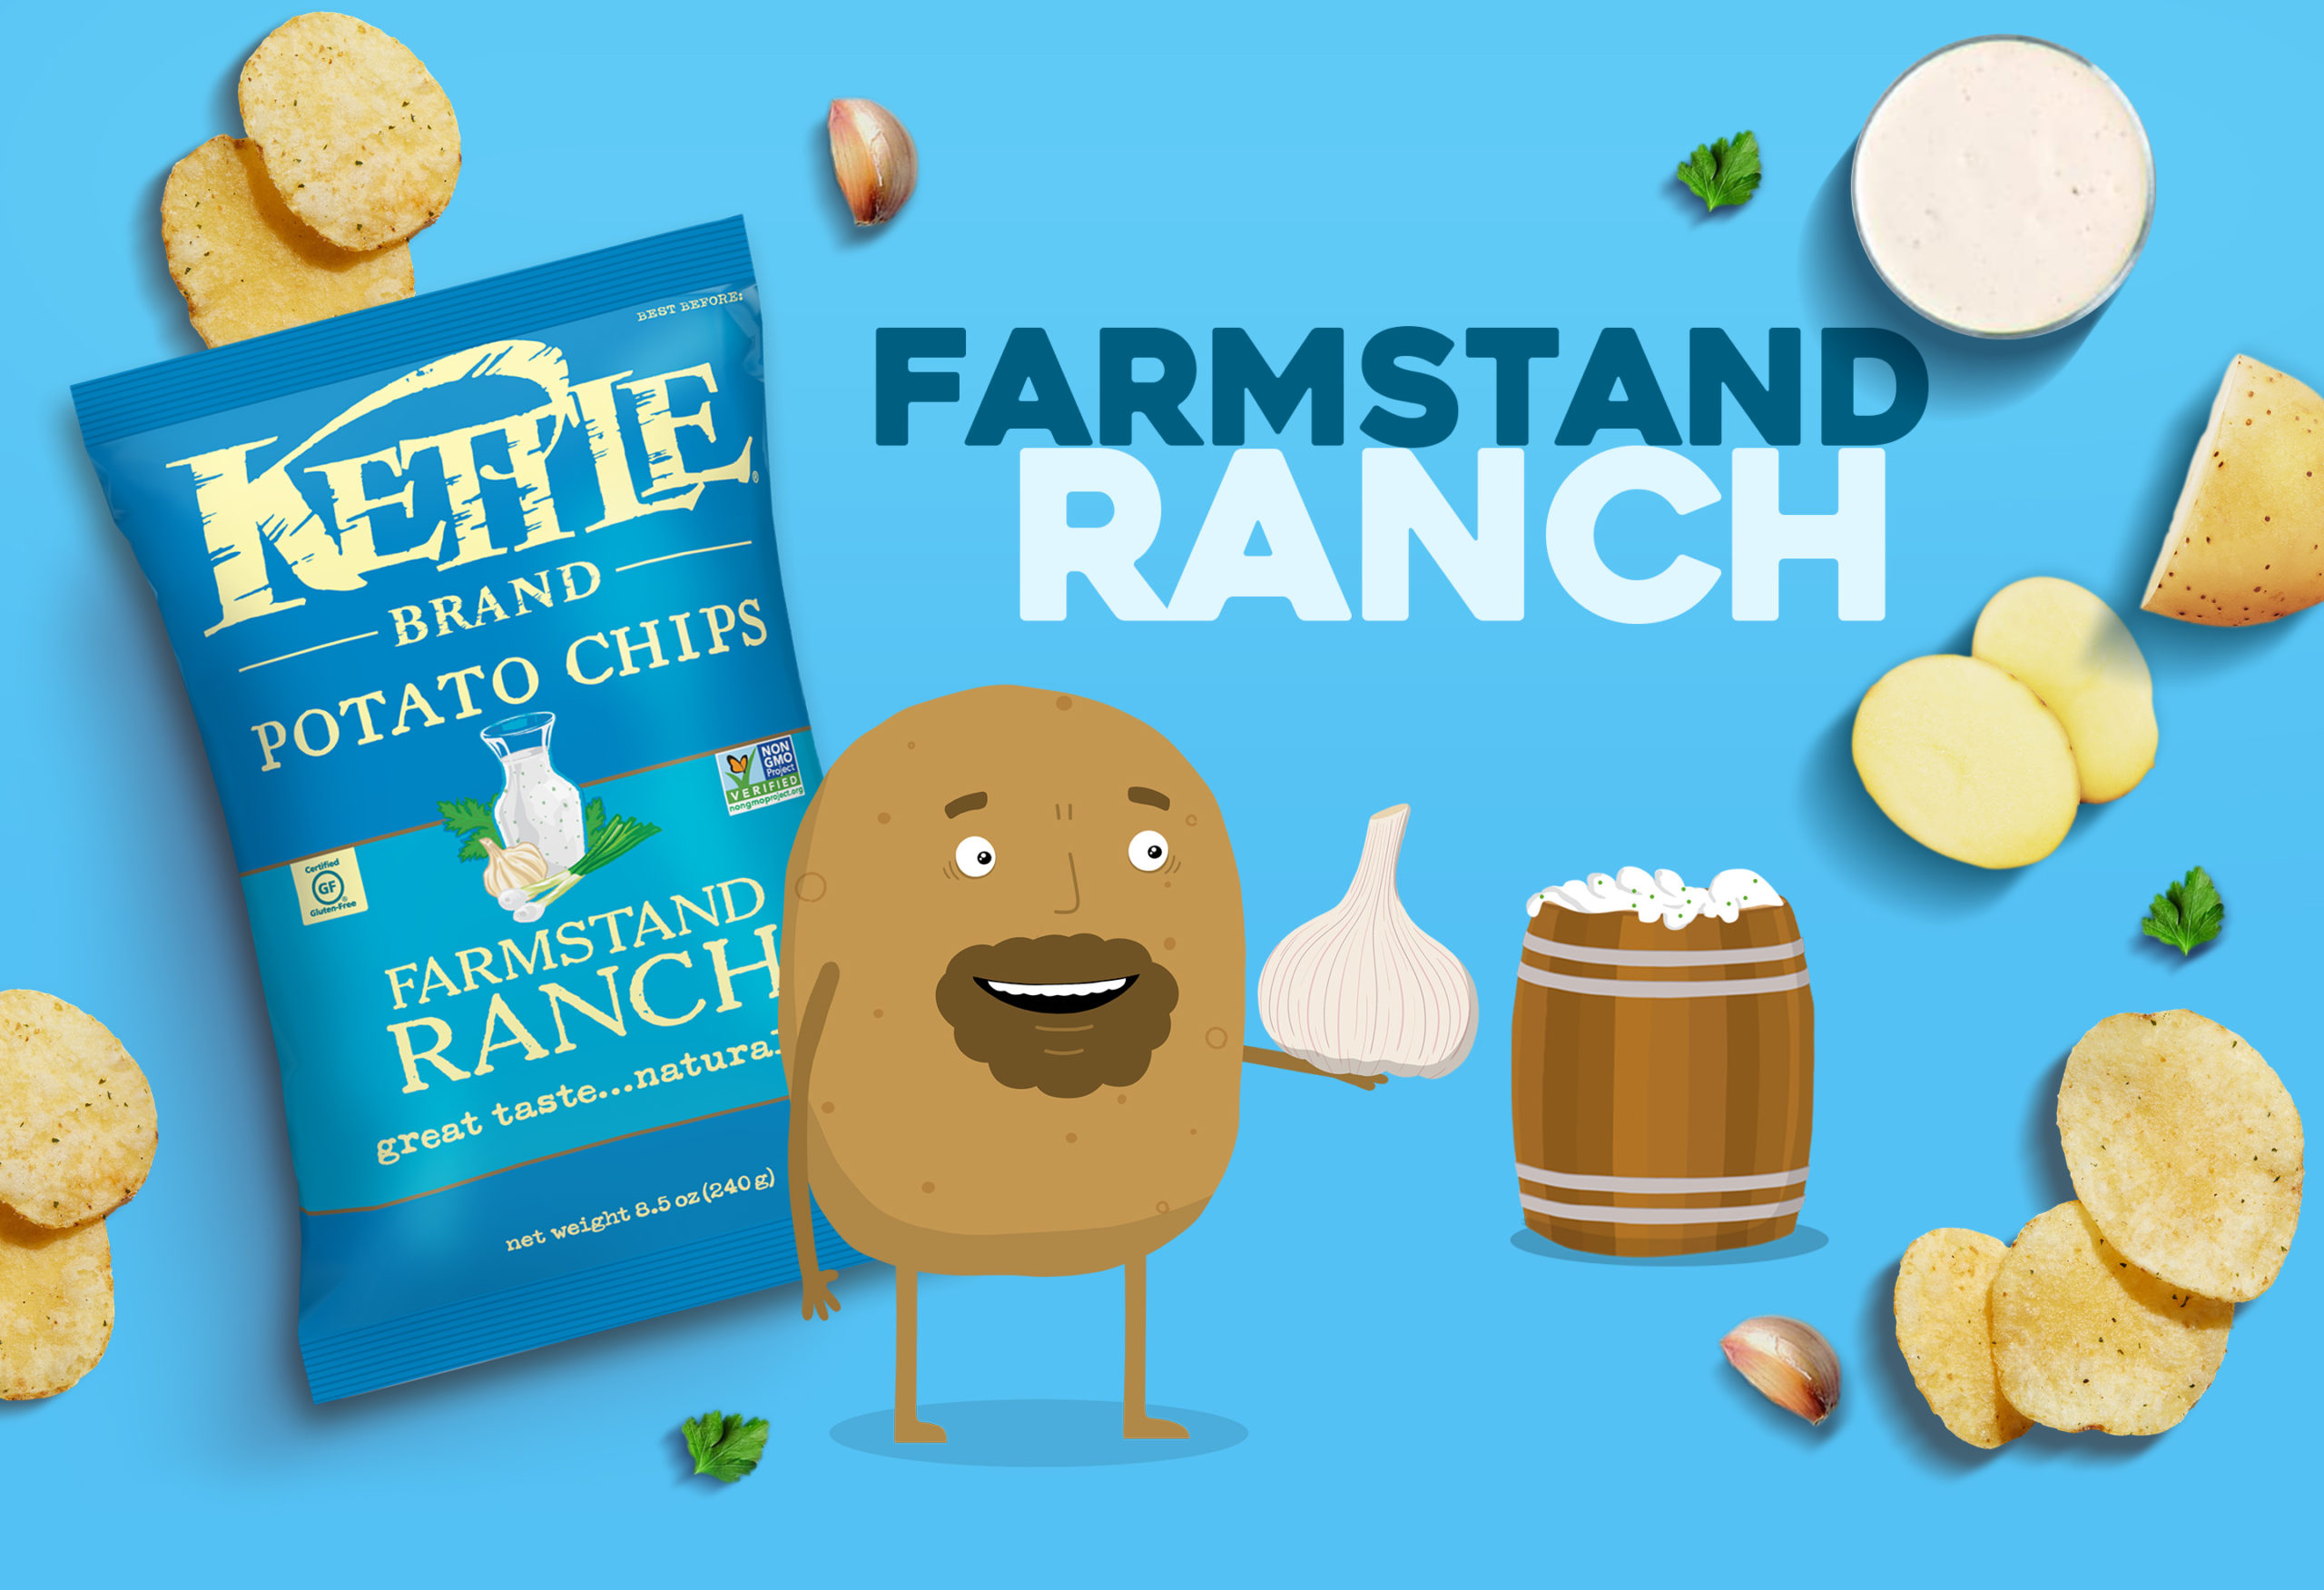 Farmstand Ranch - Kettle Brand